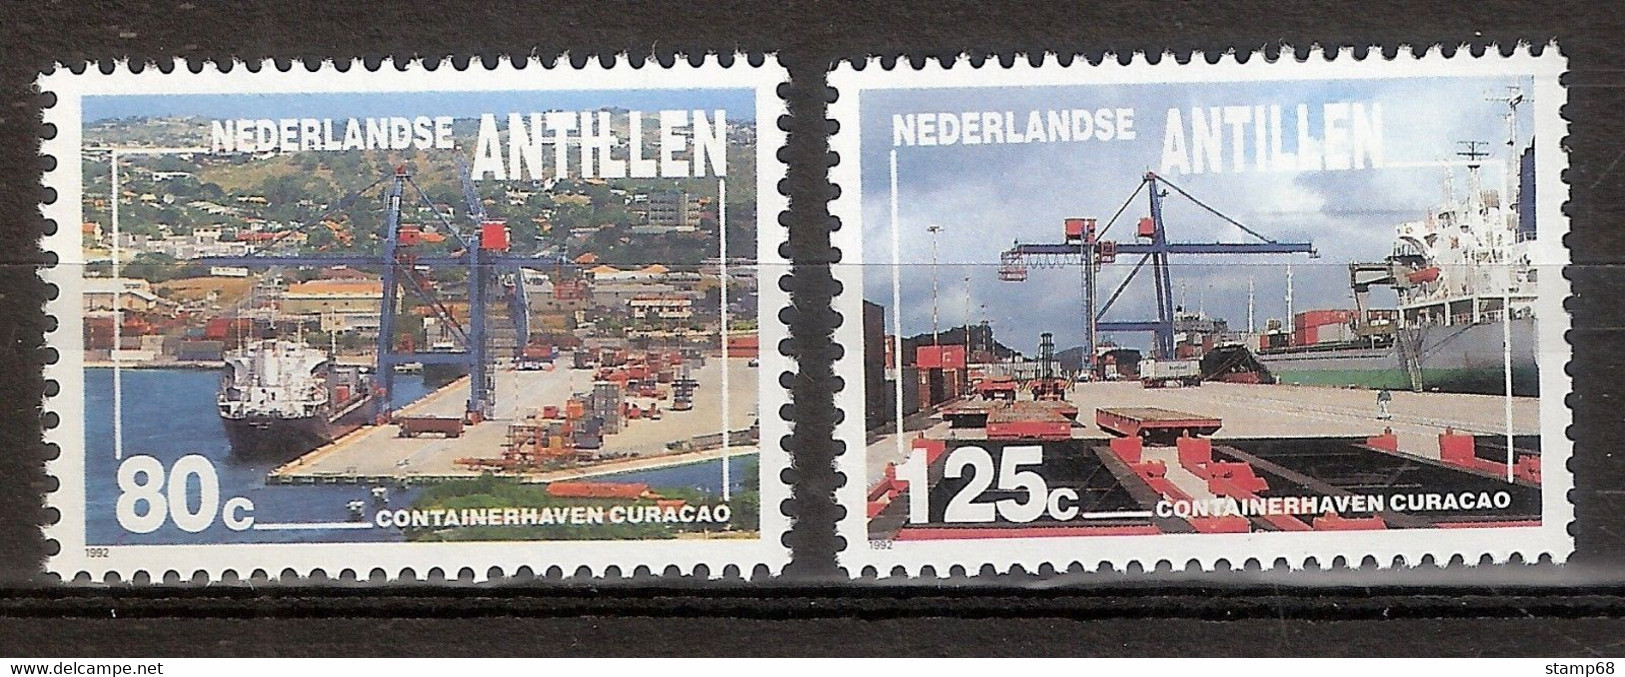 Nederlandse Antillen NVPH 1006-07 Containerhavens Curacao 1992 MNH Postfris - Niederländische Antillen, Curaçao, Aruba